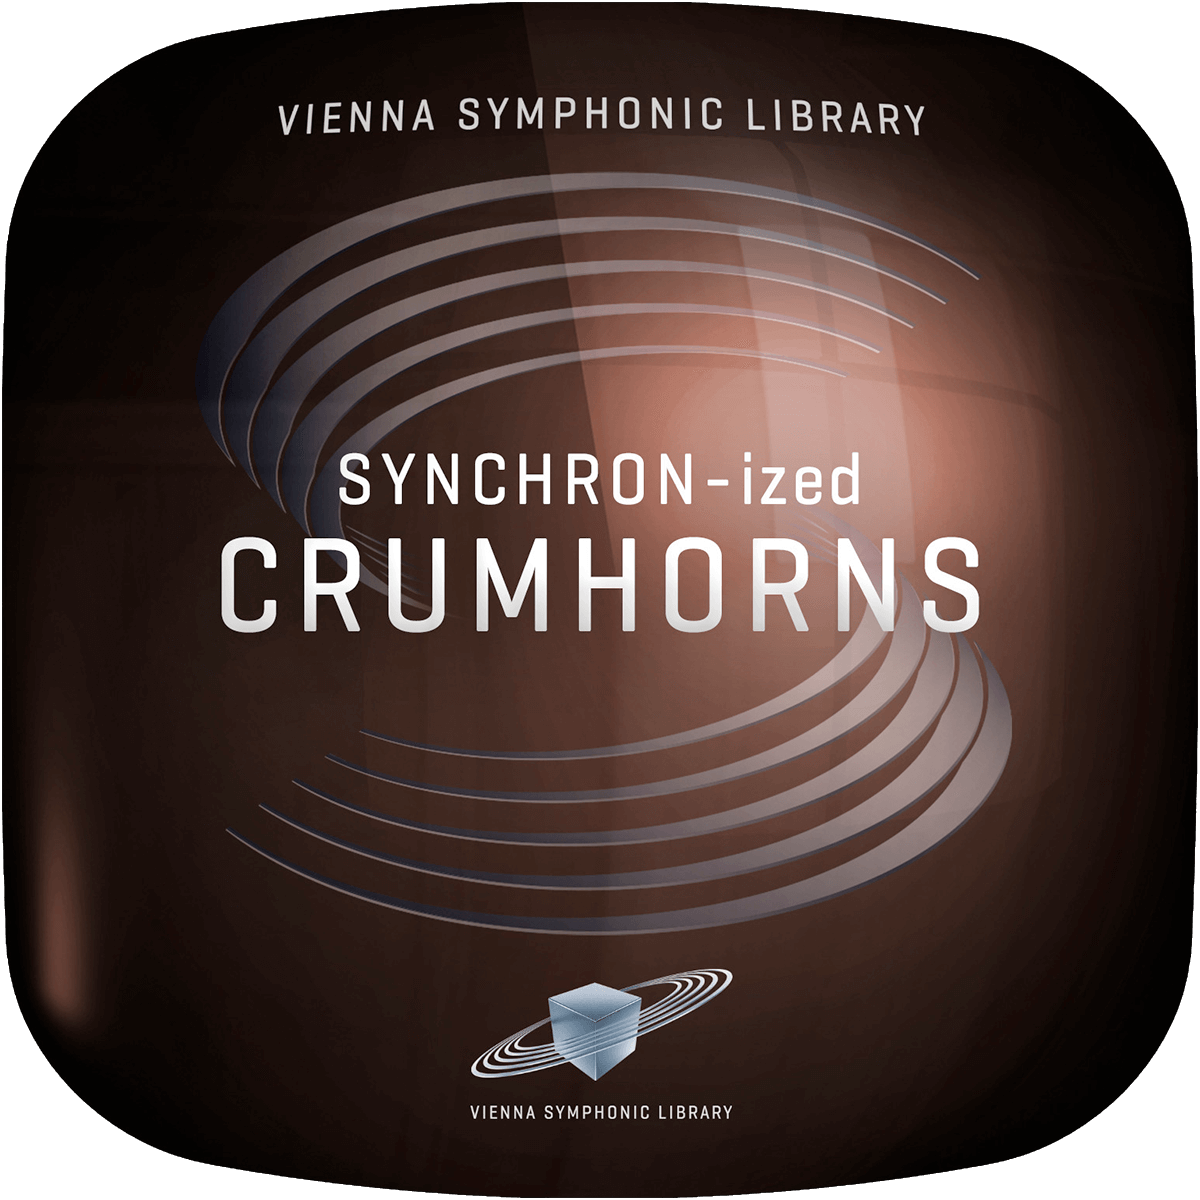 VSL Synchron-ized Crumhorns